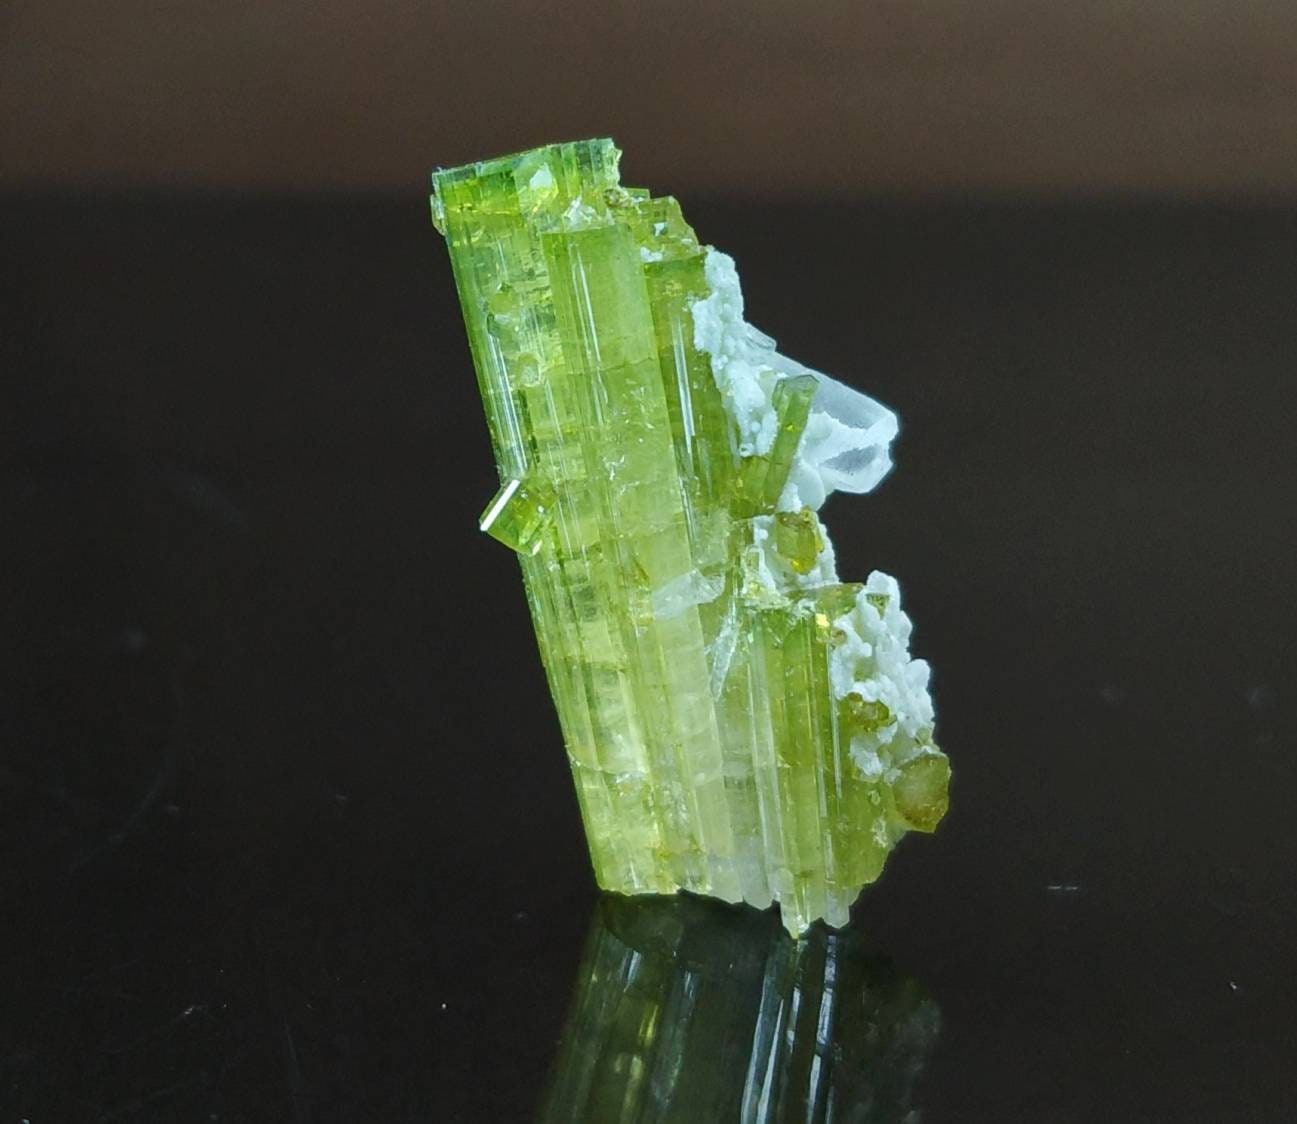 ARSAA GEMS AND MINERALSTerminated natural green tourmaline crystal with quartz on matrix from Skardu GilgitBaltistan Pakistan, weight: 3.3 grams - Premium  from ARSAA GEMS AND MINERALS - Just $50.00! Shop now at ARSAA GEMS AND MINERALS